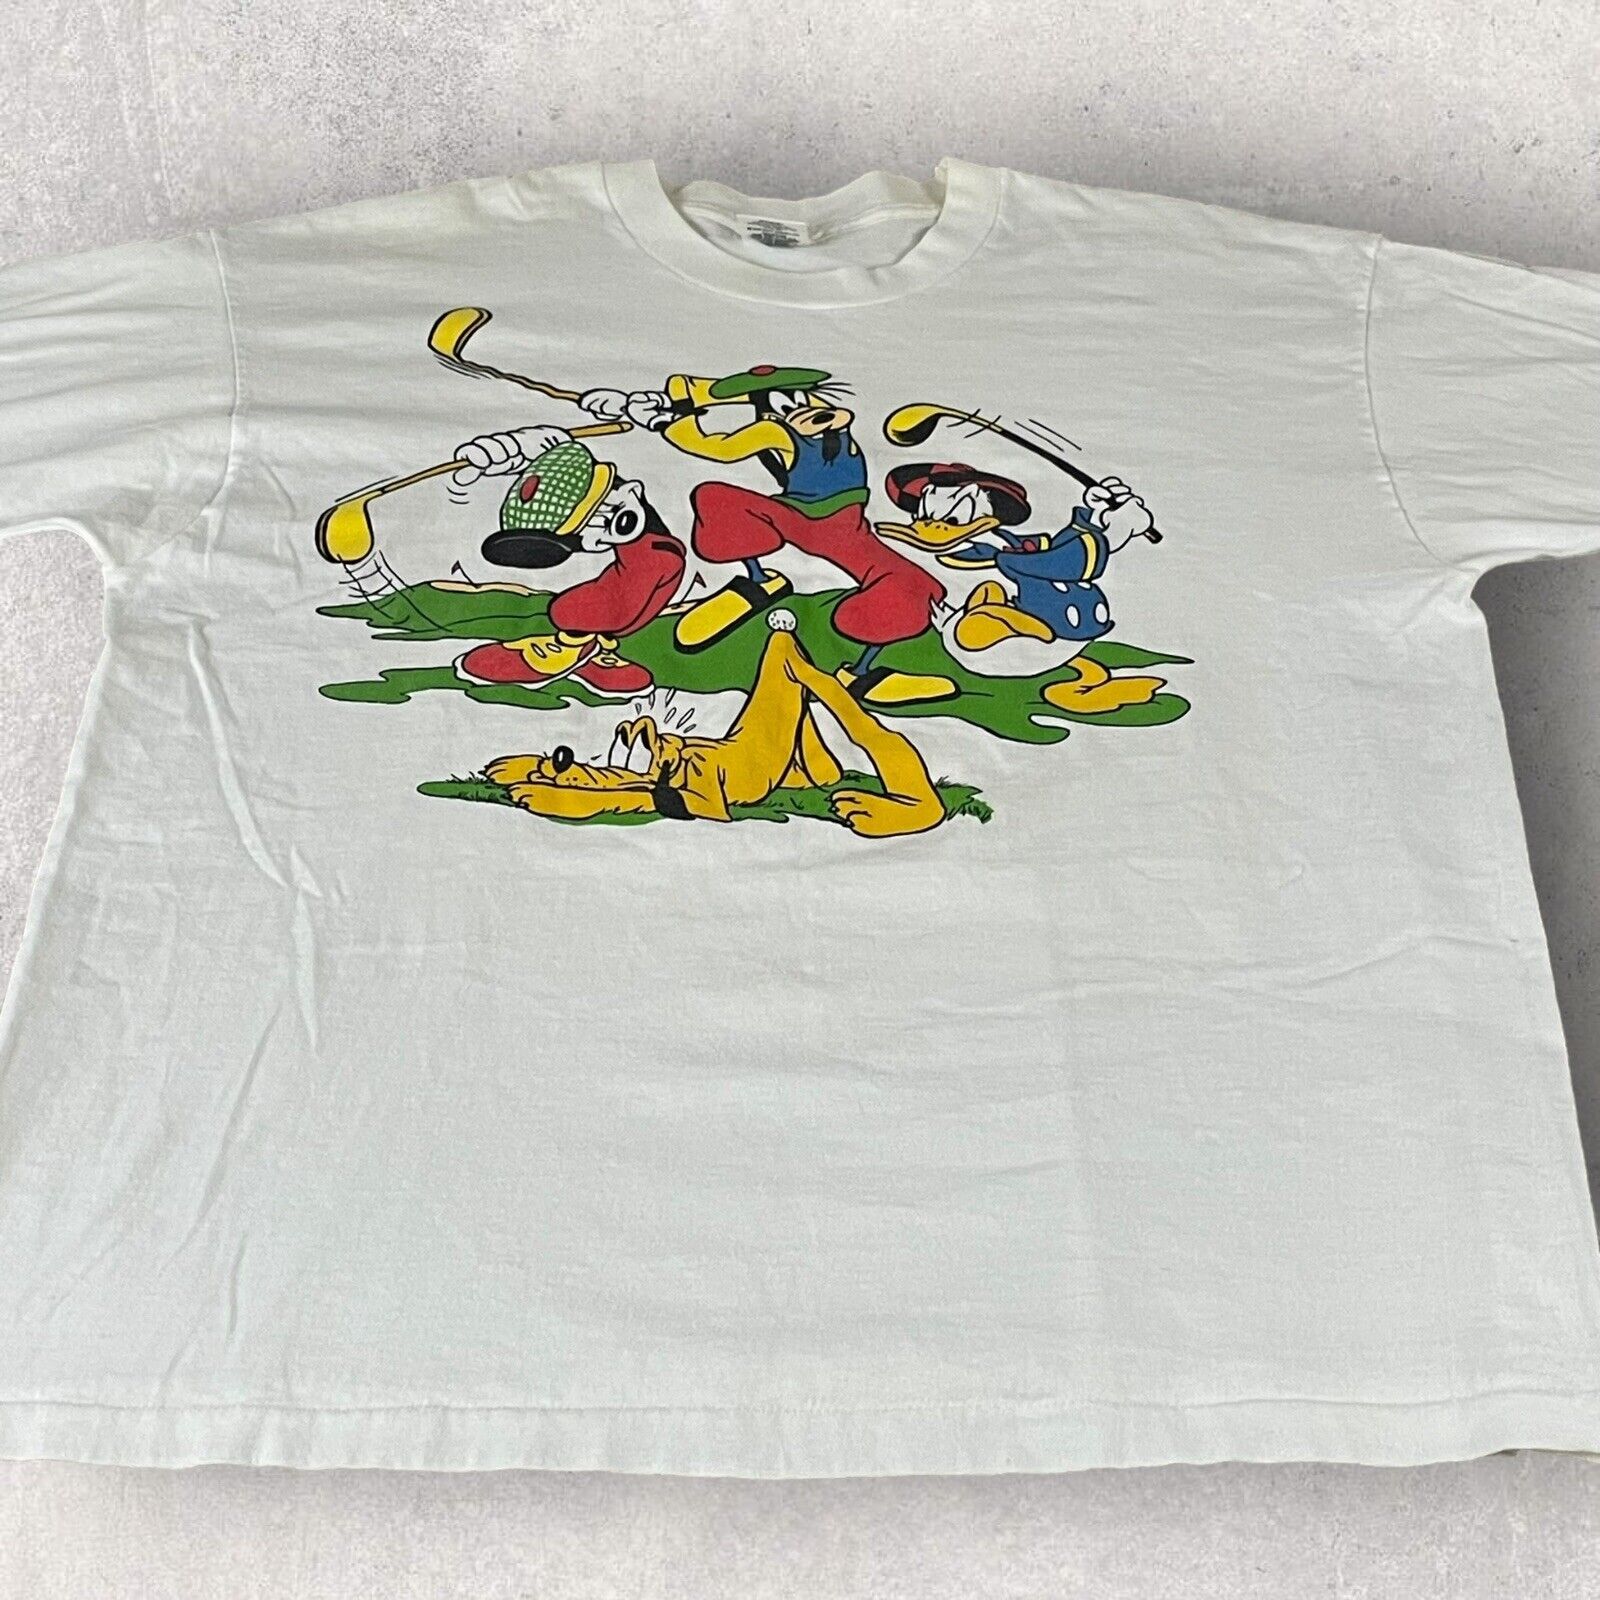 Vintage Disney Shirt One Size Golf Goofy Donald Duck USA Mickey Mouse F147